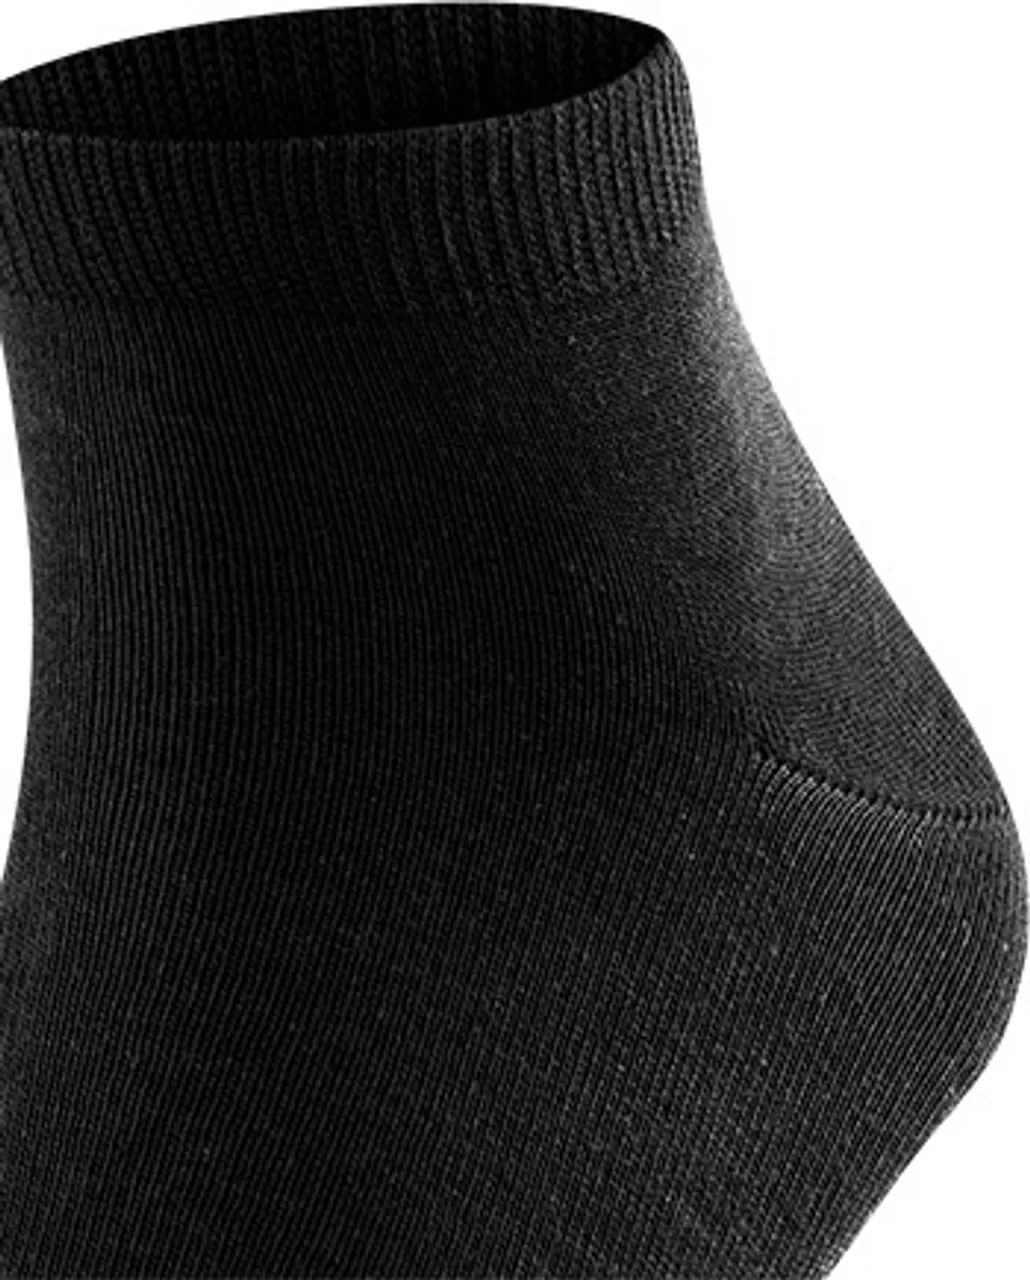 Falke Herren Socken schwarz Baumwolle unifarben